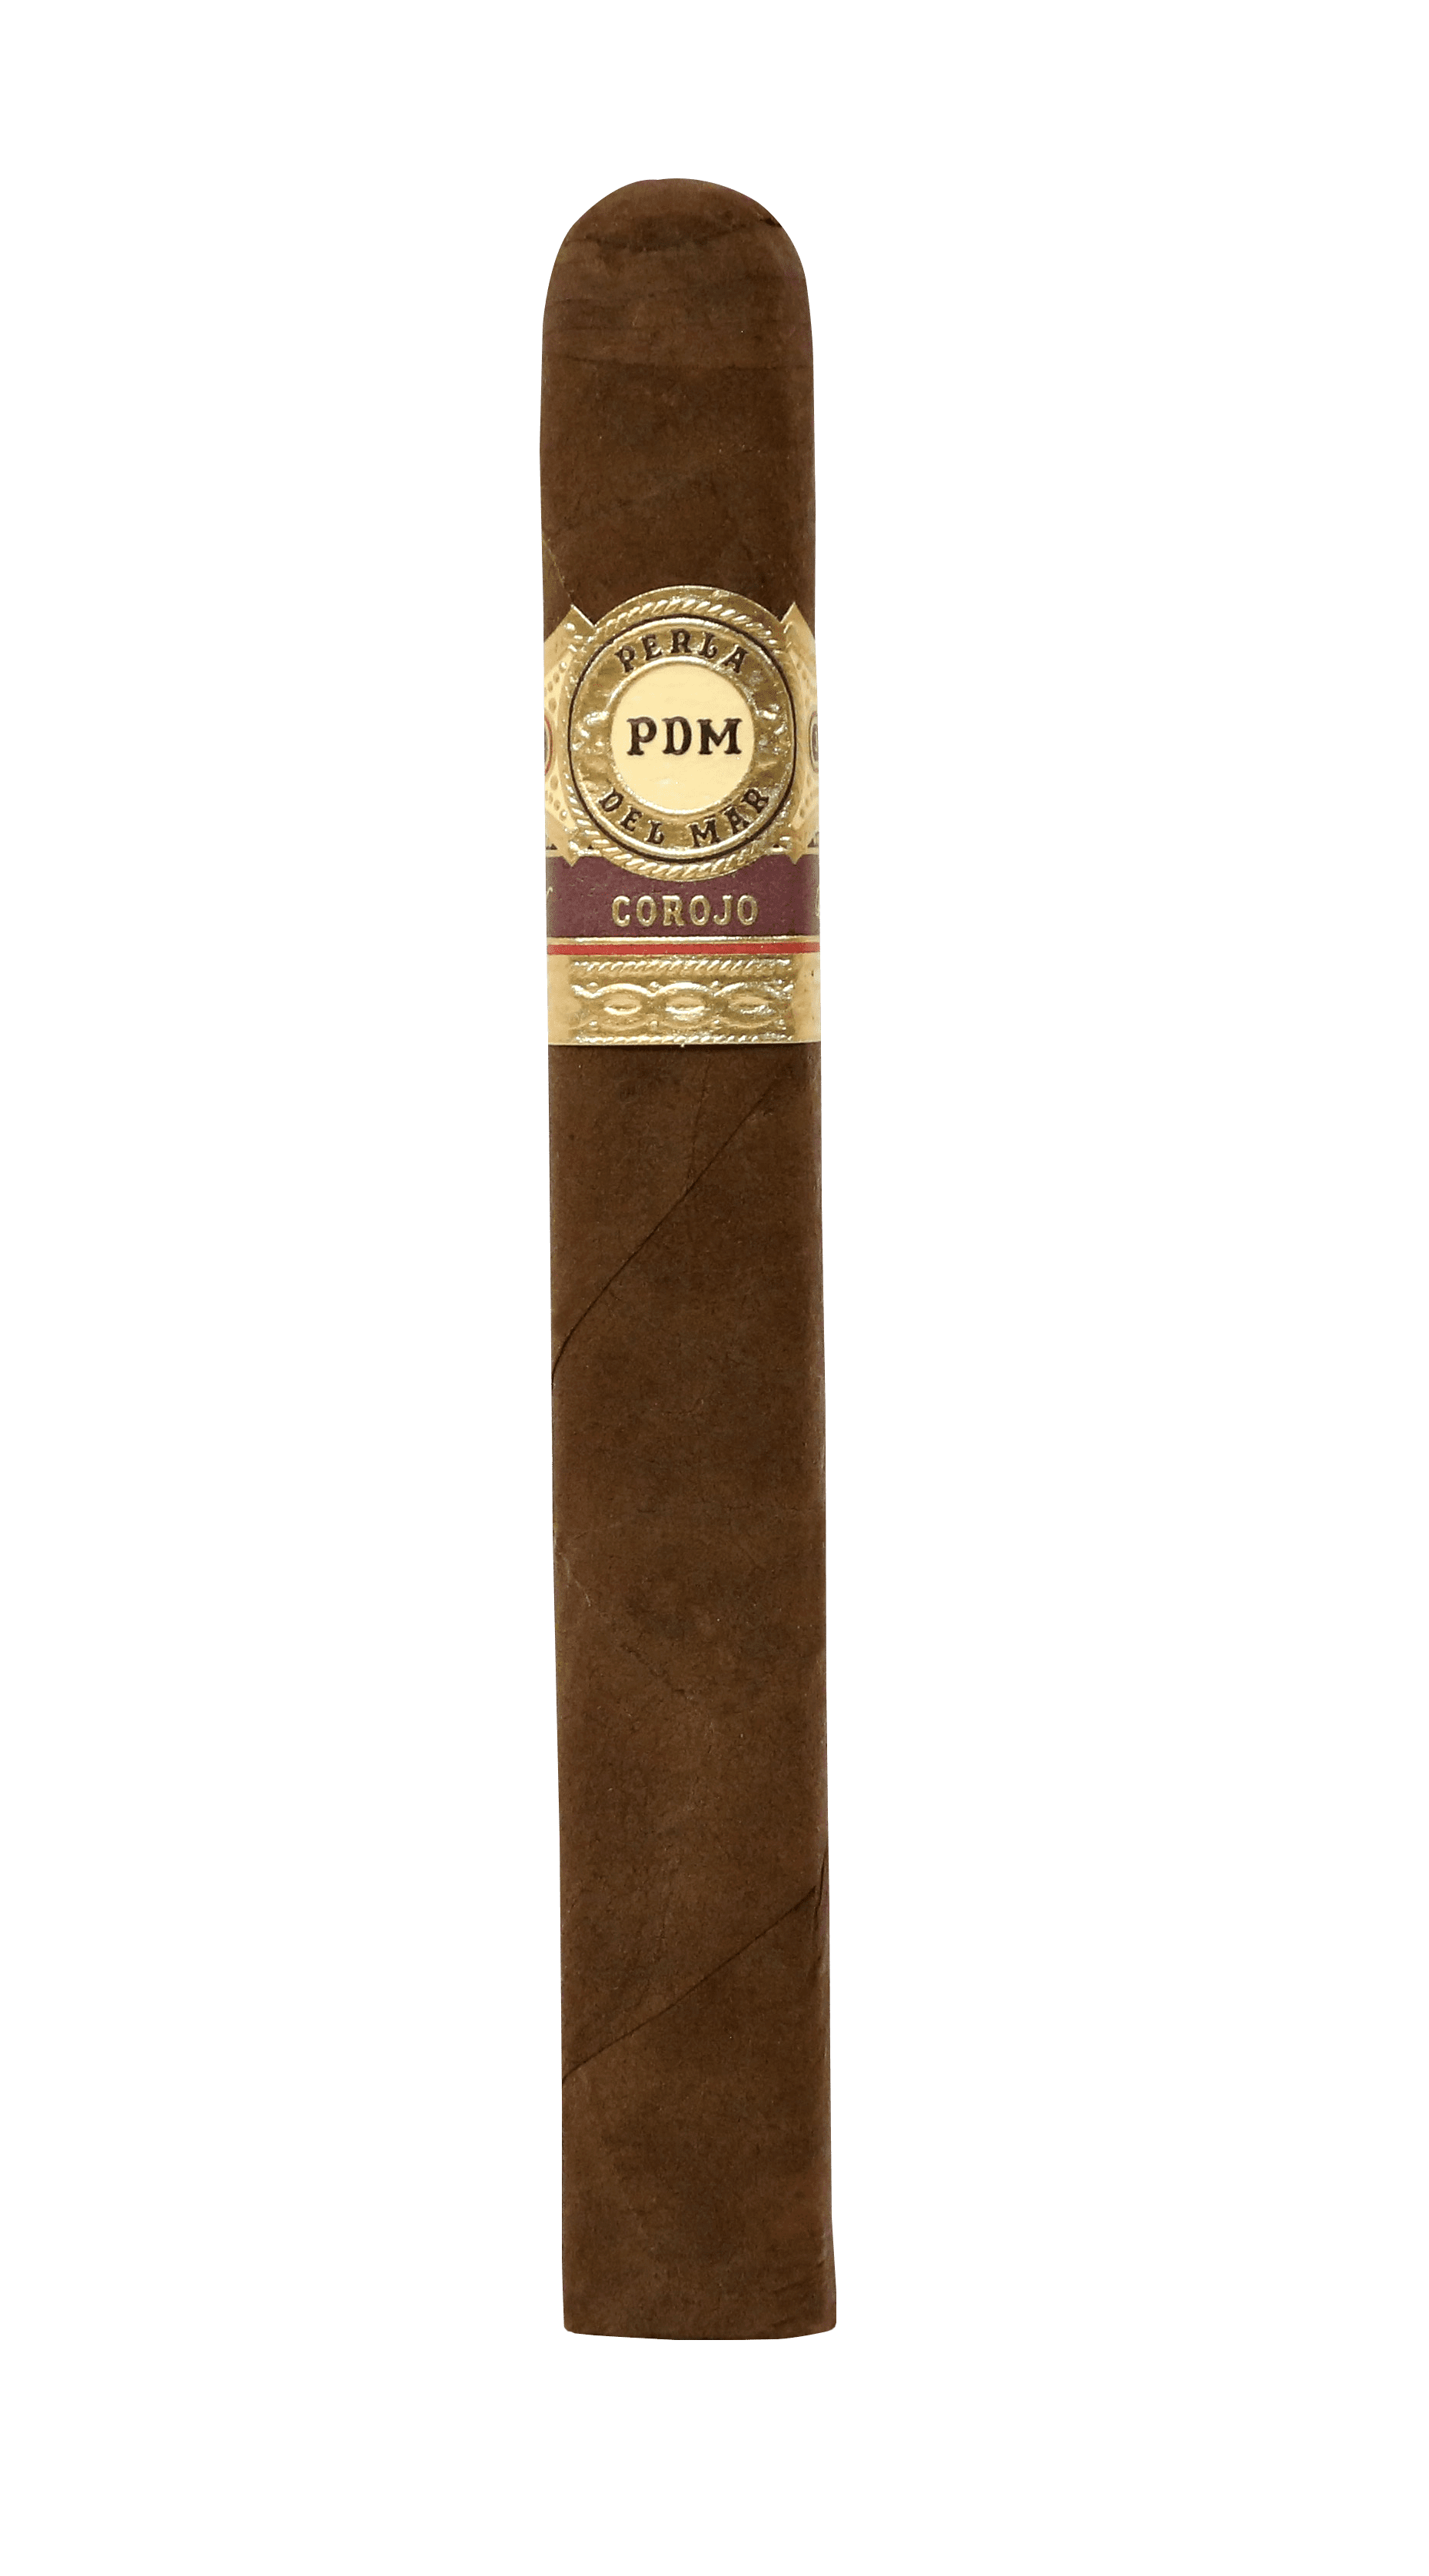 Single Perla Del Mar Corojo Corona Gorda cigar